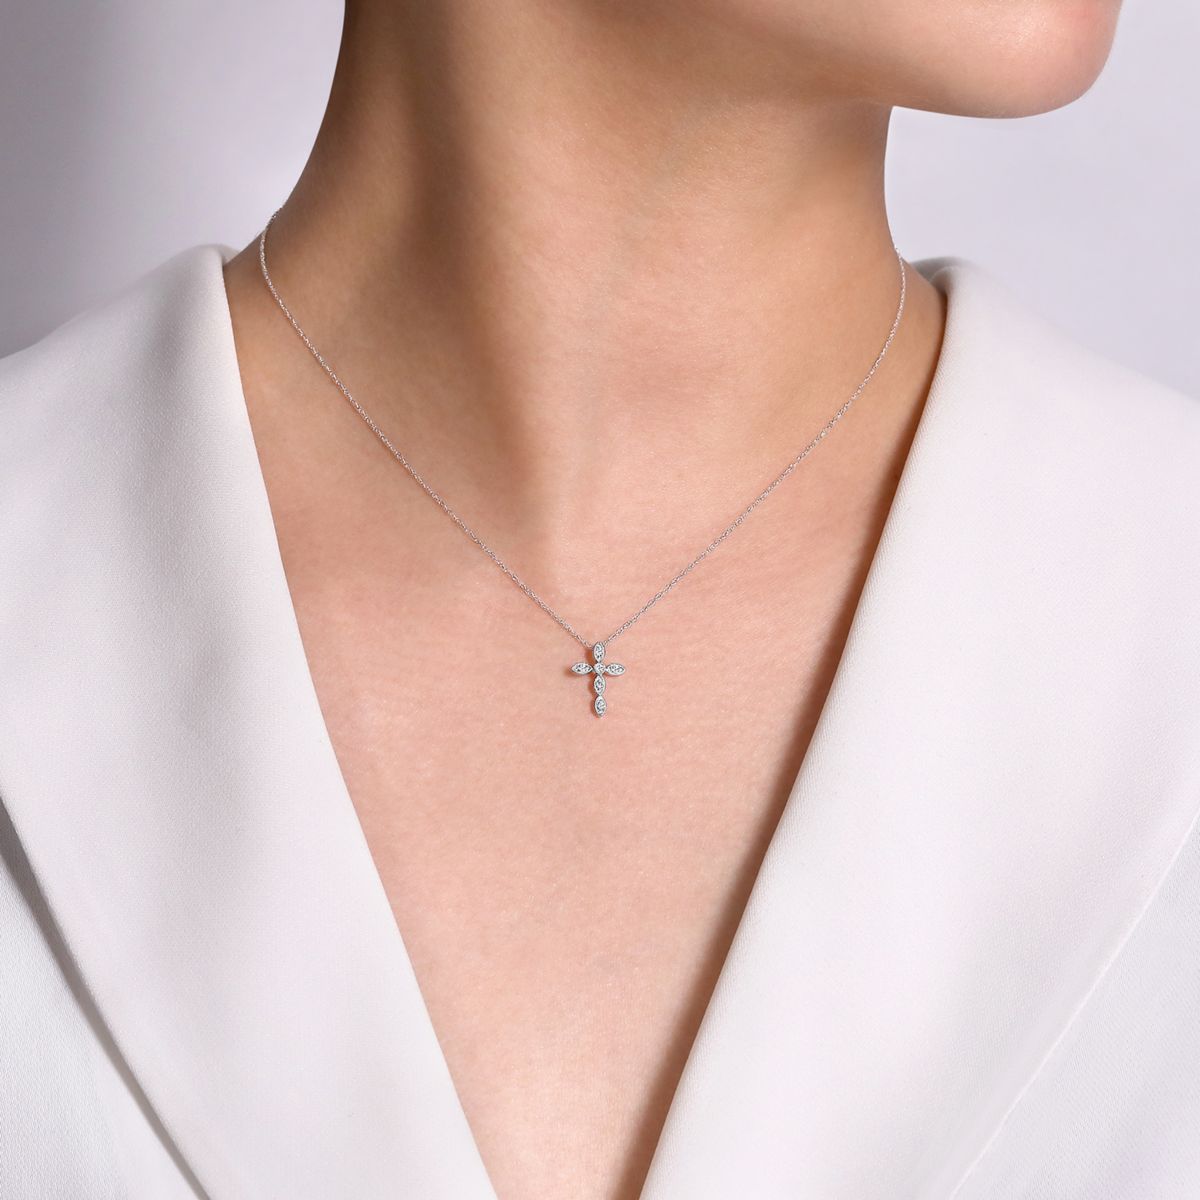 Gabriel Diamond Cross Necklace in 14kt White Gold (1/10ct tw)